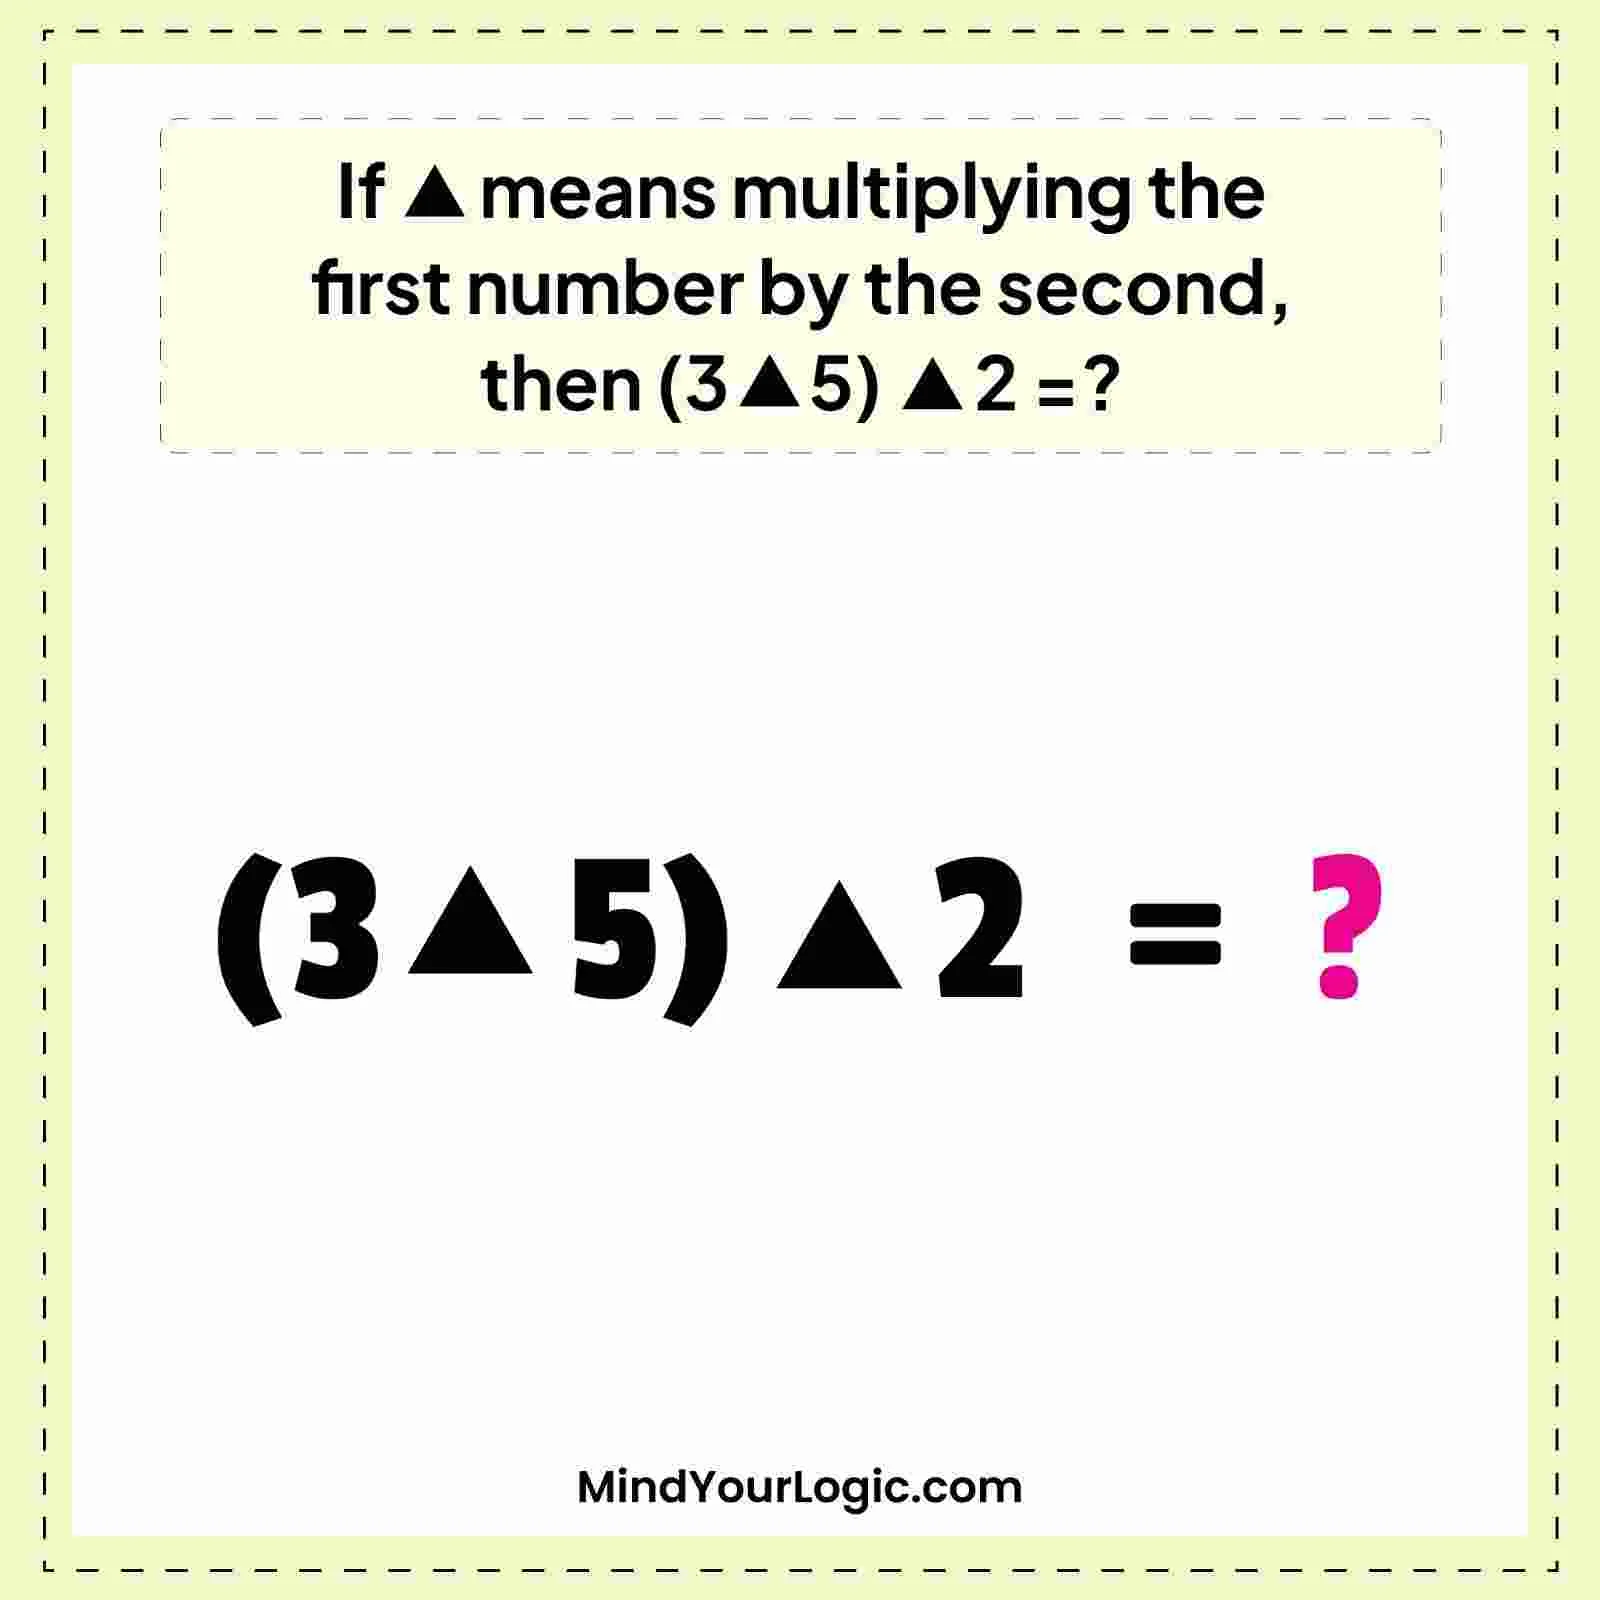 math-iq-test-challenge-multiplying-3-5-2